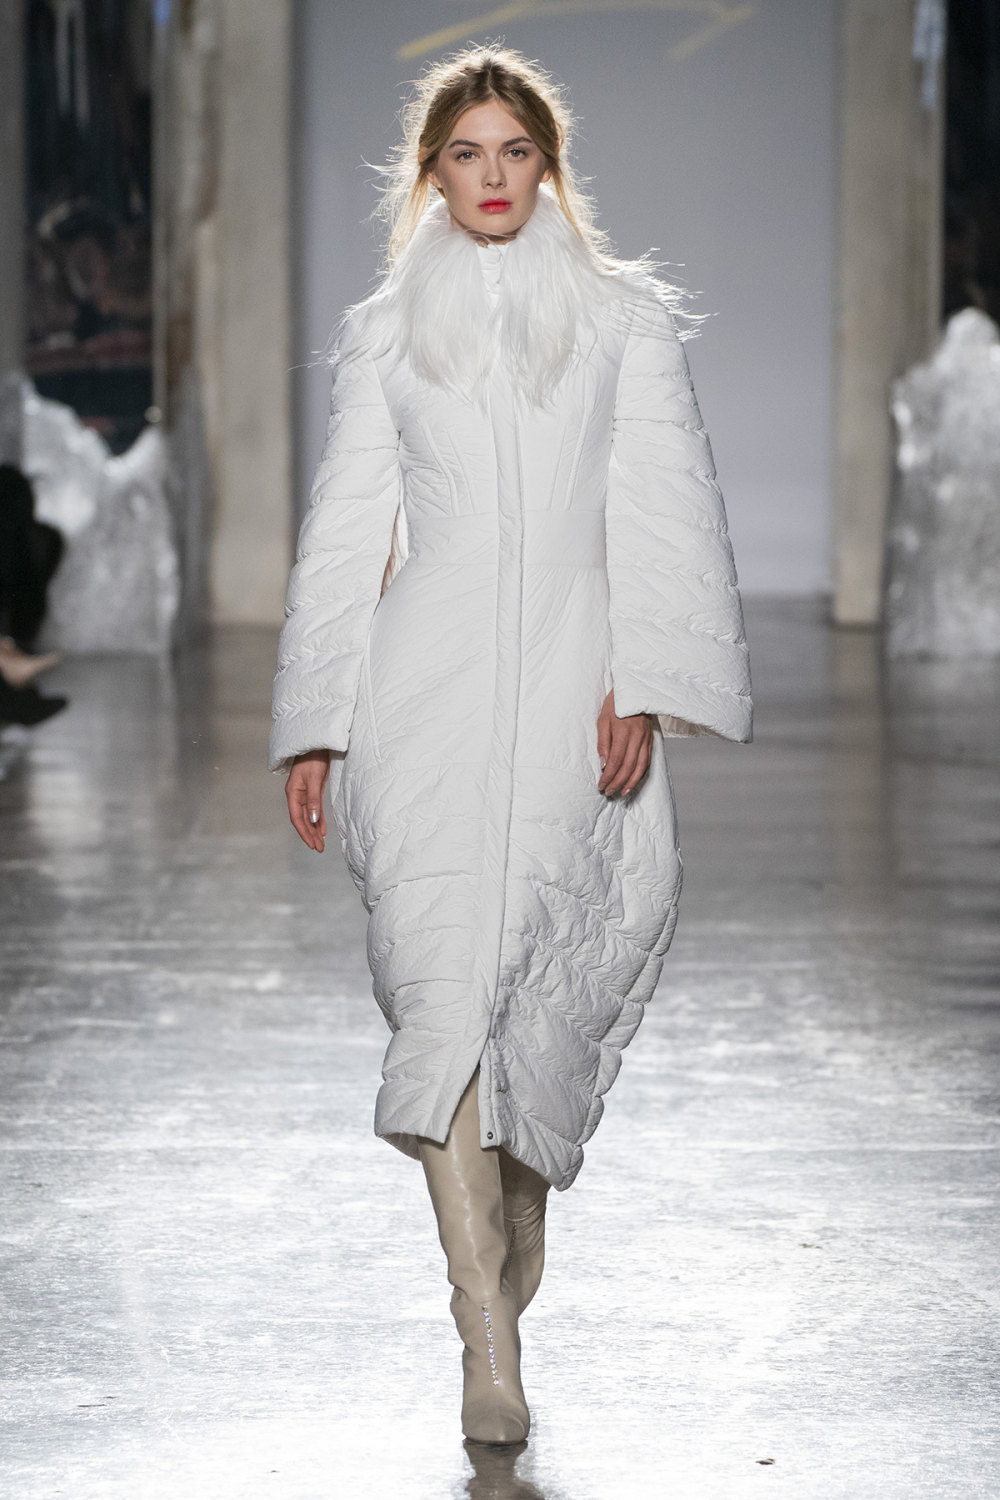 Genny时装系列将黑豹印花混合在一起搭配宽松梦幻般的白色礼服-3.jpg